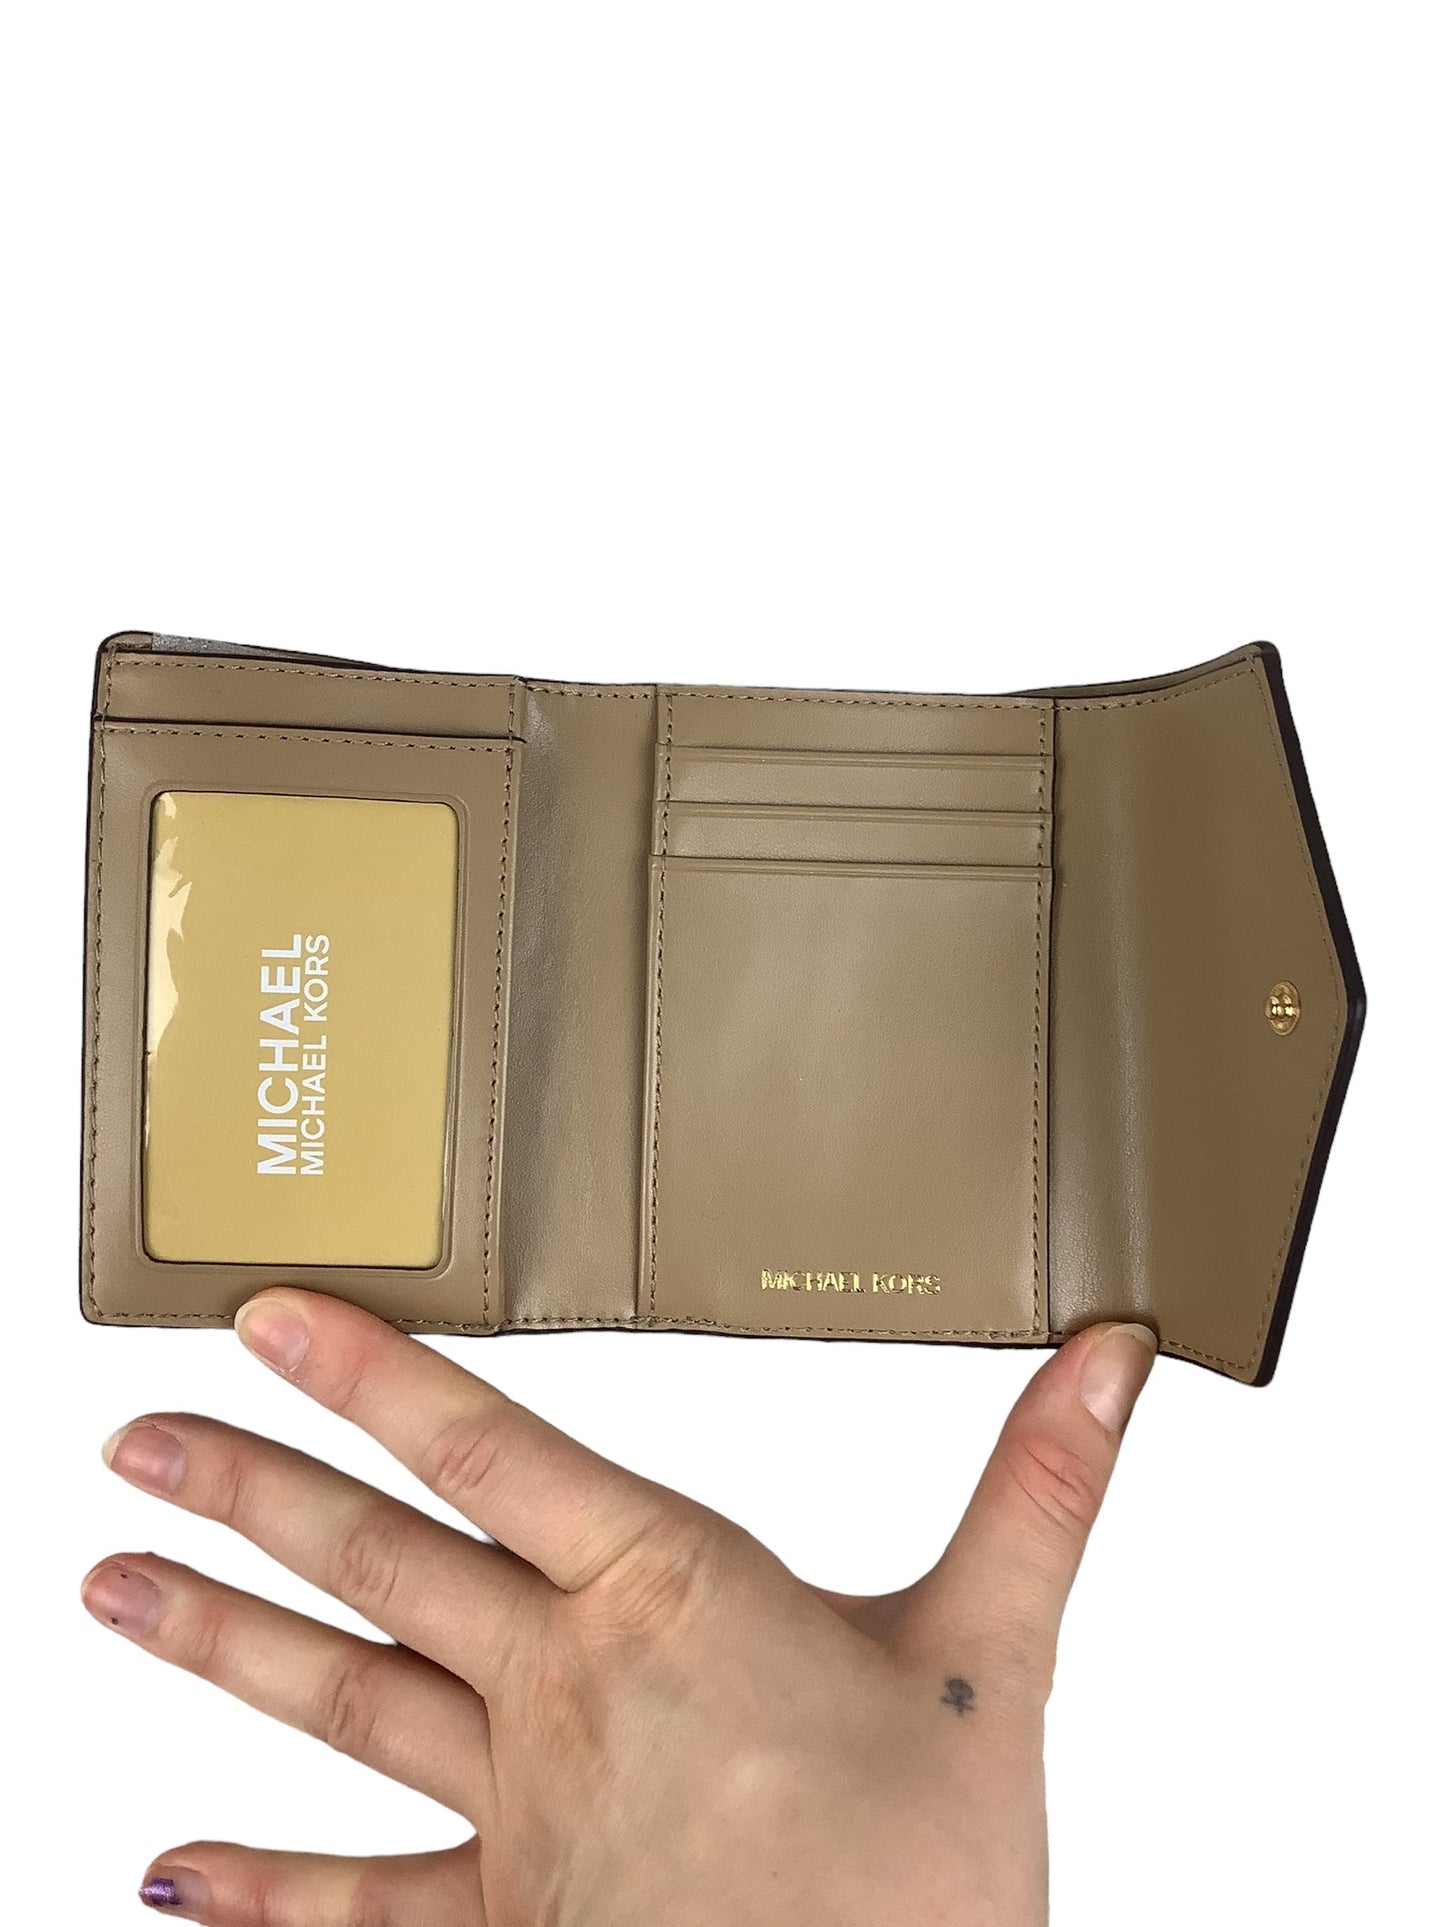 Wallet Designer Michael Kors, Size Small